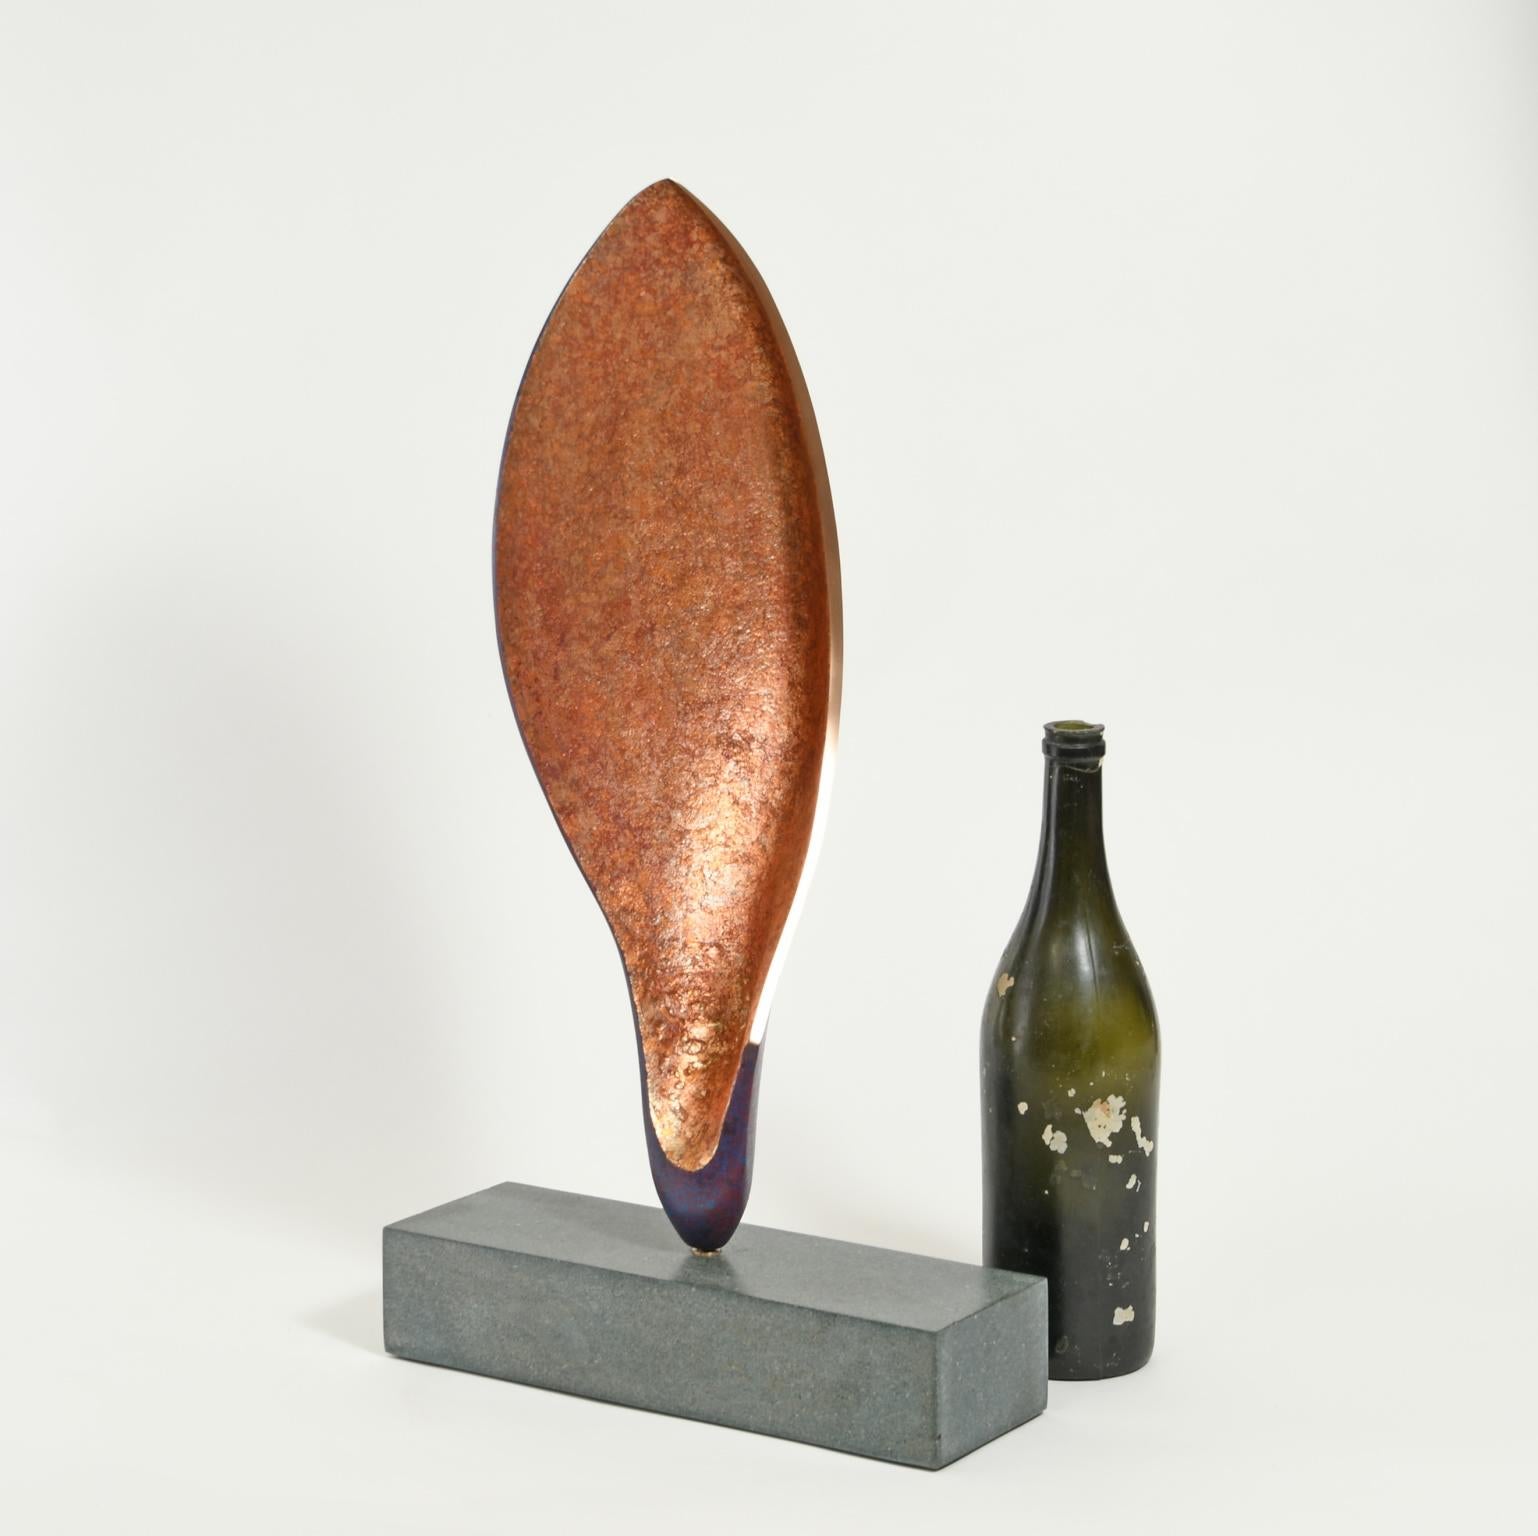 British Contemporary Sculpture by Philip Hearsey - Response III 8